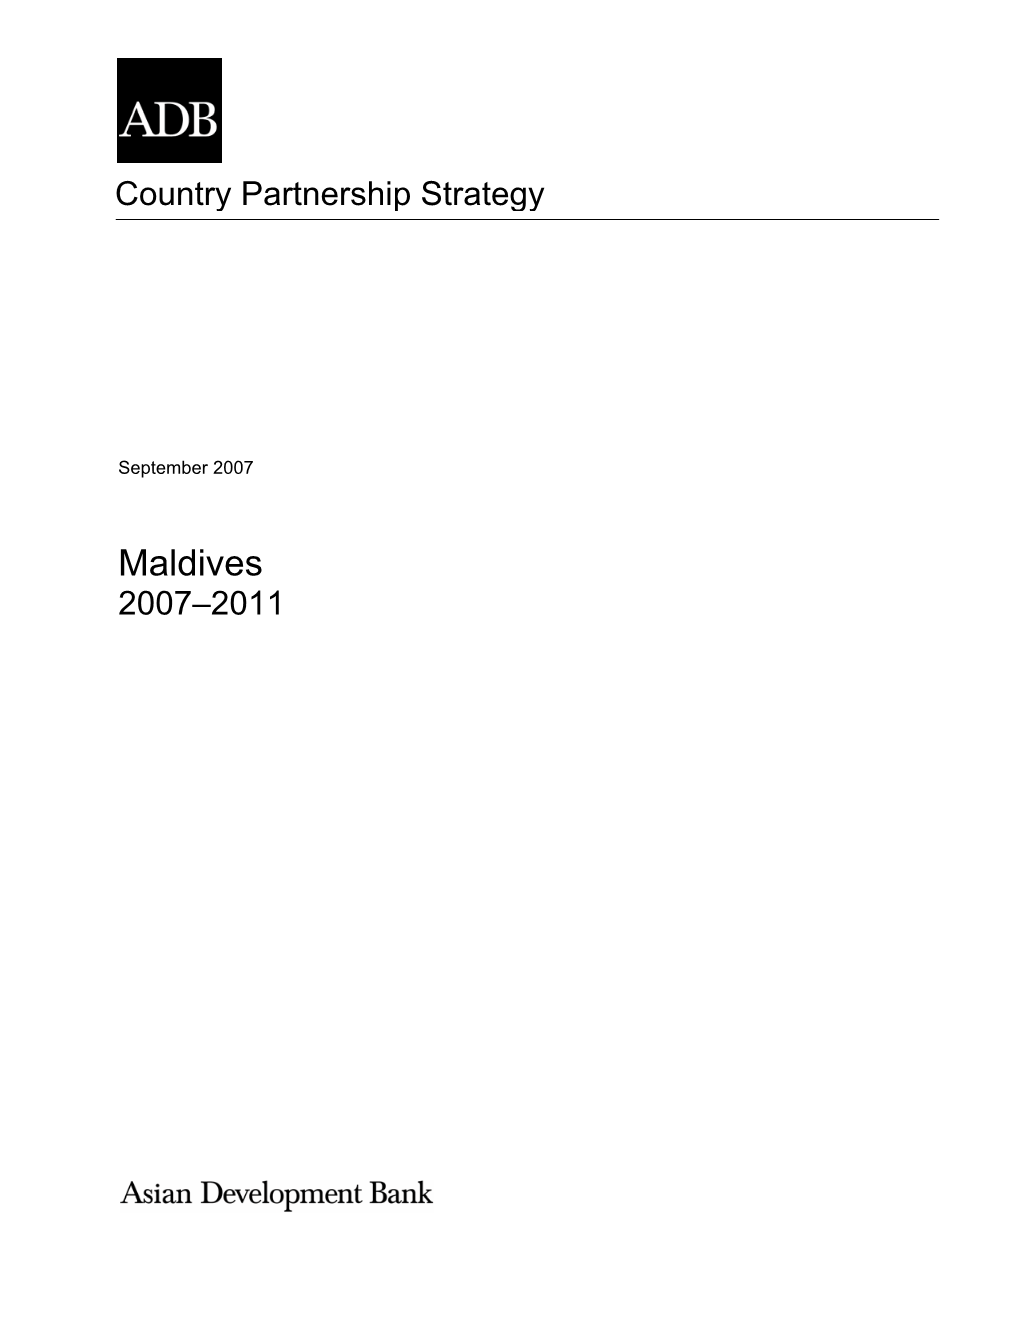 Country Partnership Strategy Maldives 2007-2011